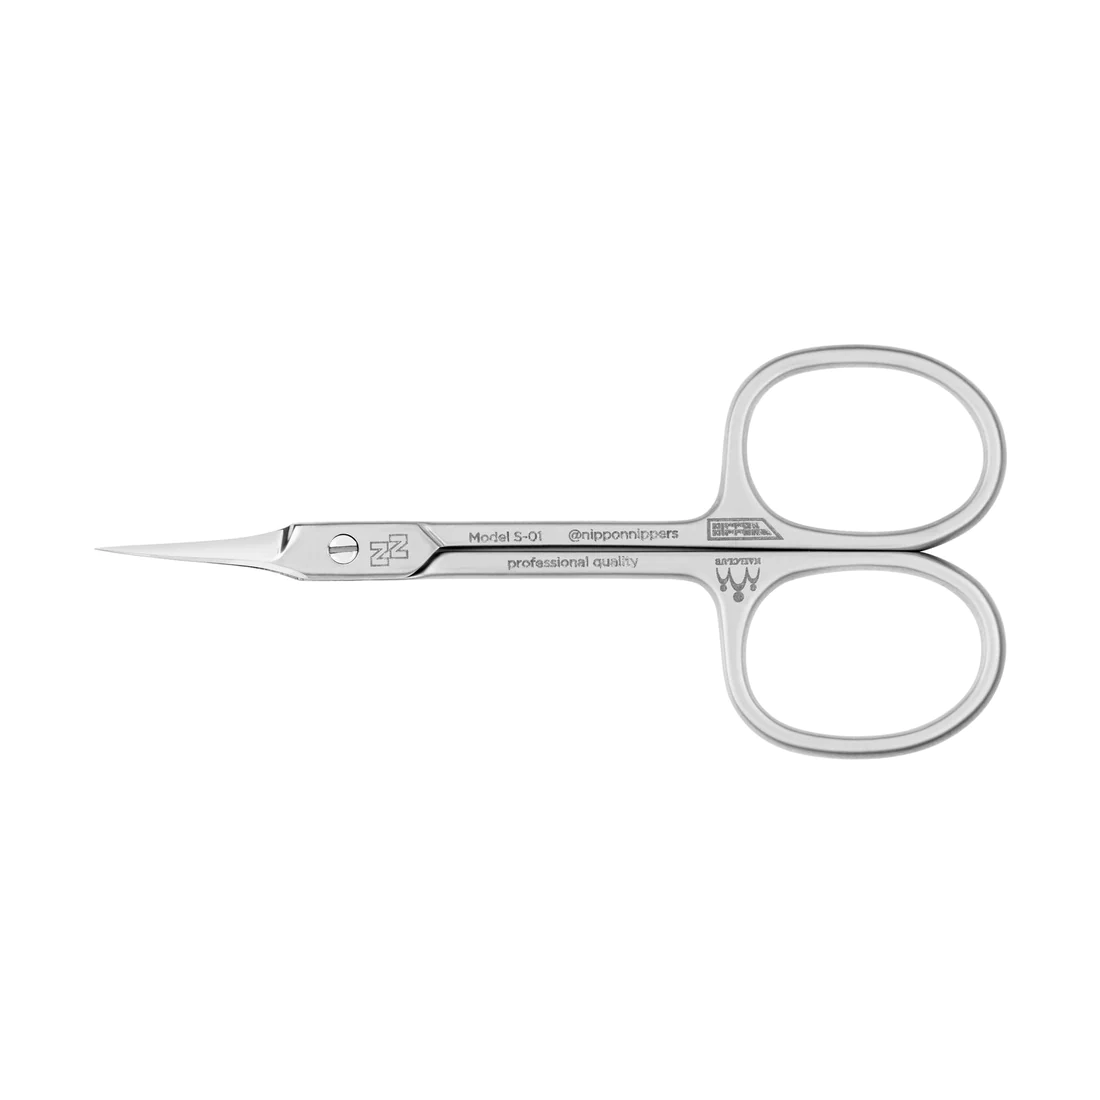 NIPPON NIPPERS Cuticle scissors S-01